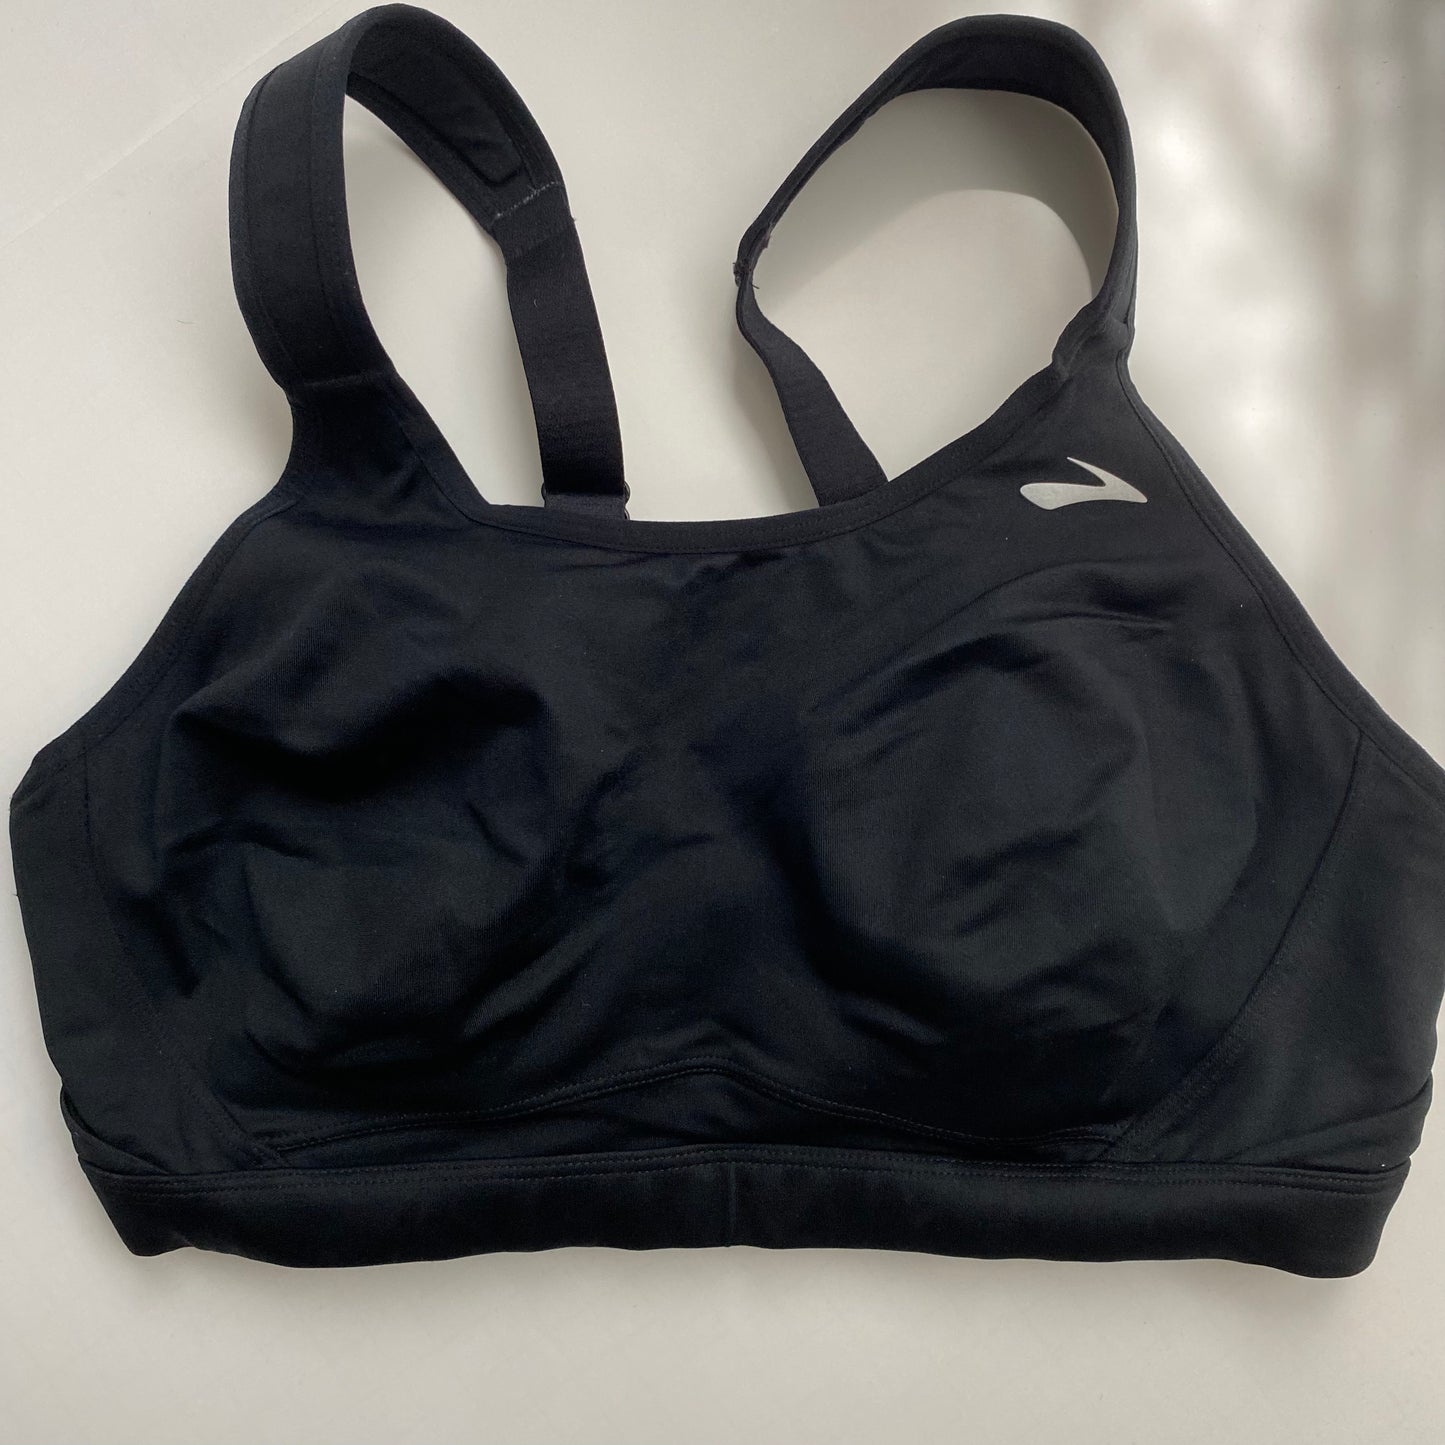 Moving Comfort Juno sports bra, 34DD (US)